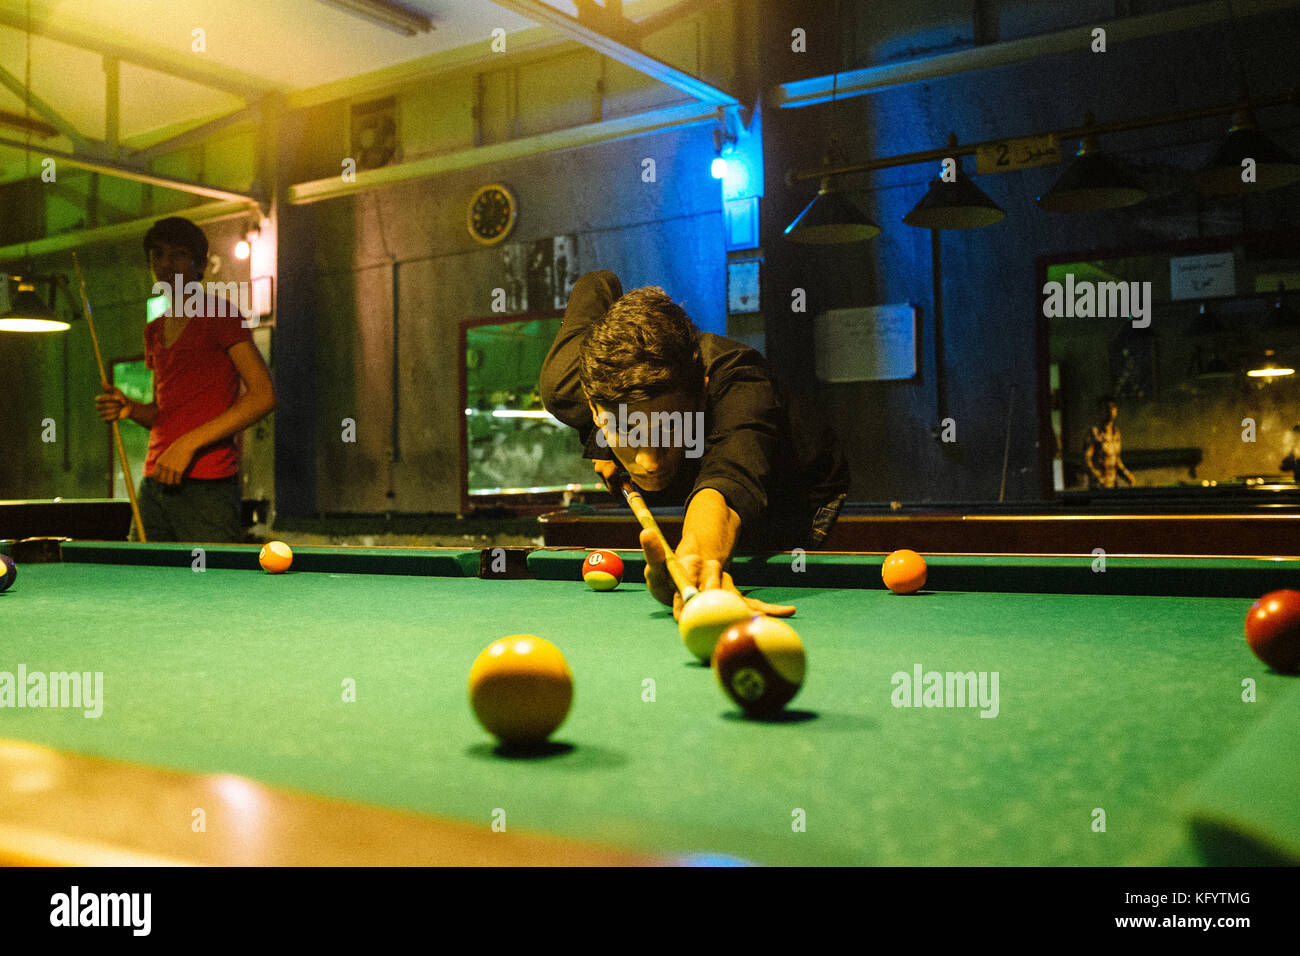 Bandar Abbas, Iran - December 14, 2013. Young Iranian men are playing billiard at a billiard hall in Bandar Abbas. Stock Photo